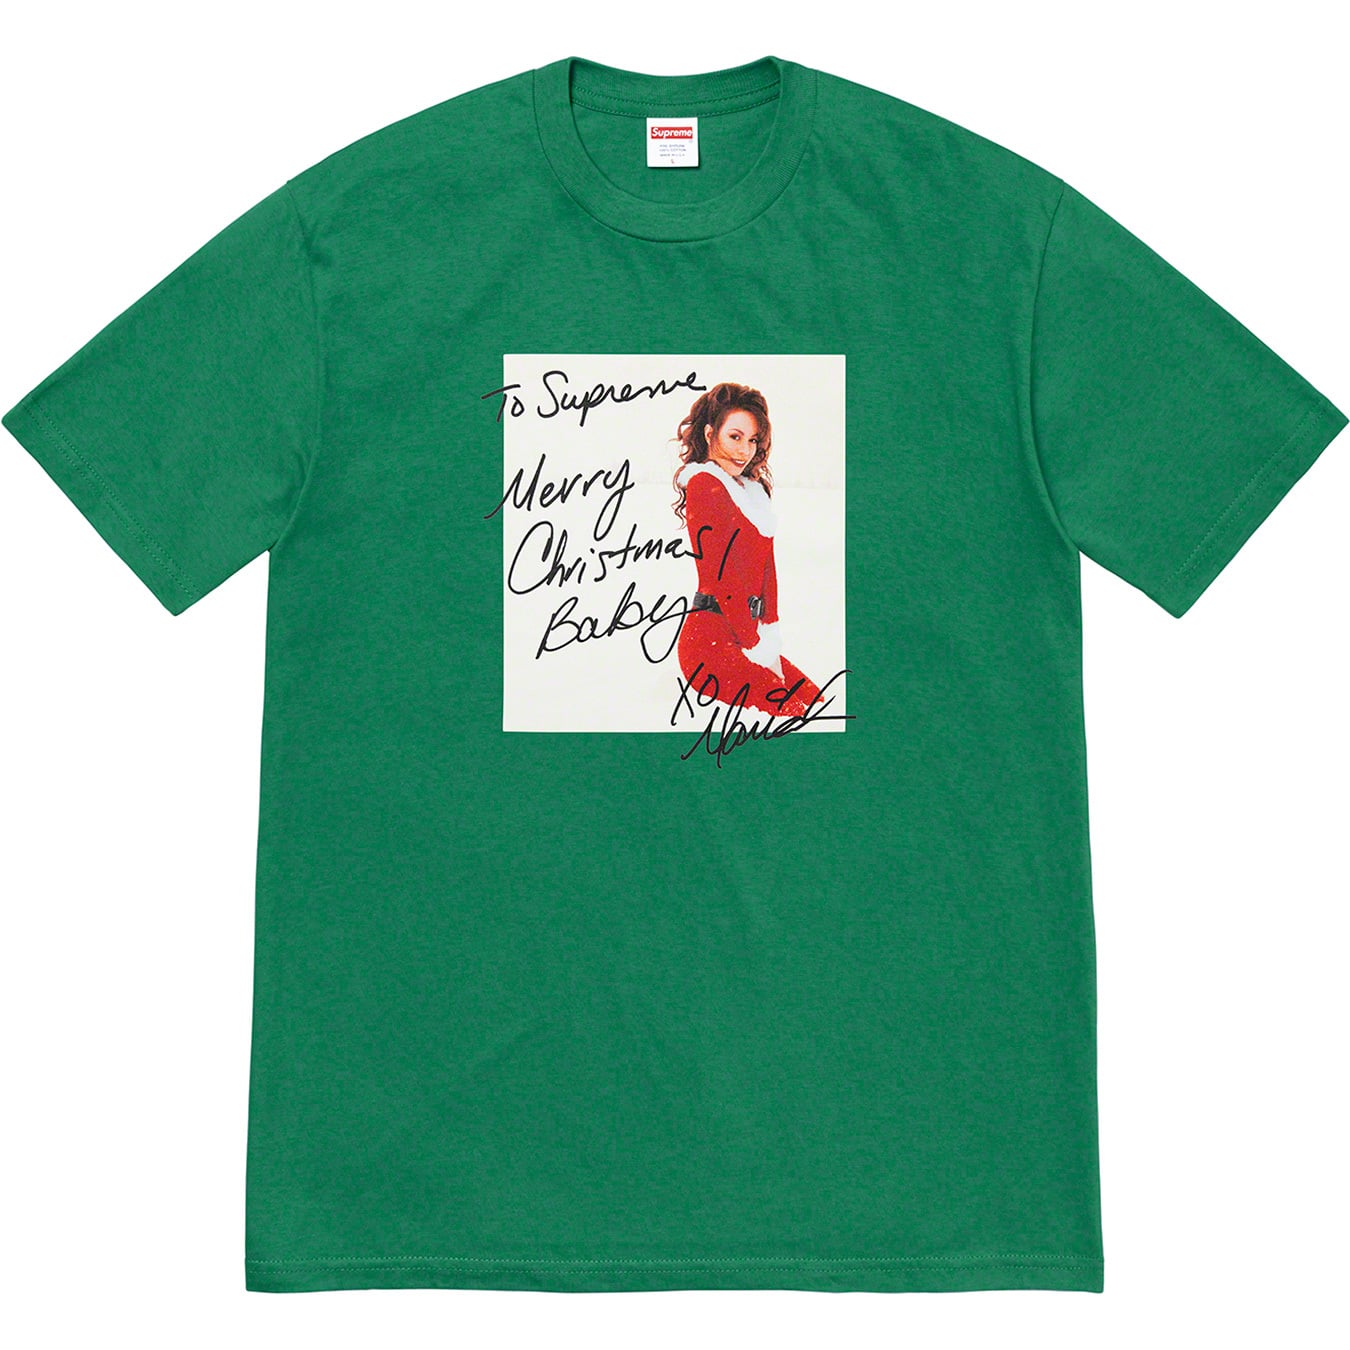 Where to Shop Supreme's Mariah Carey's Christmas T-Shirt 